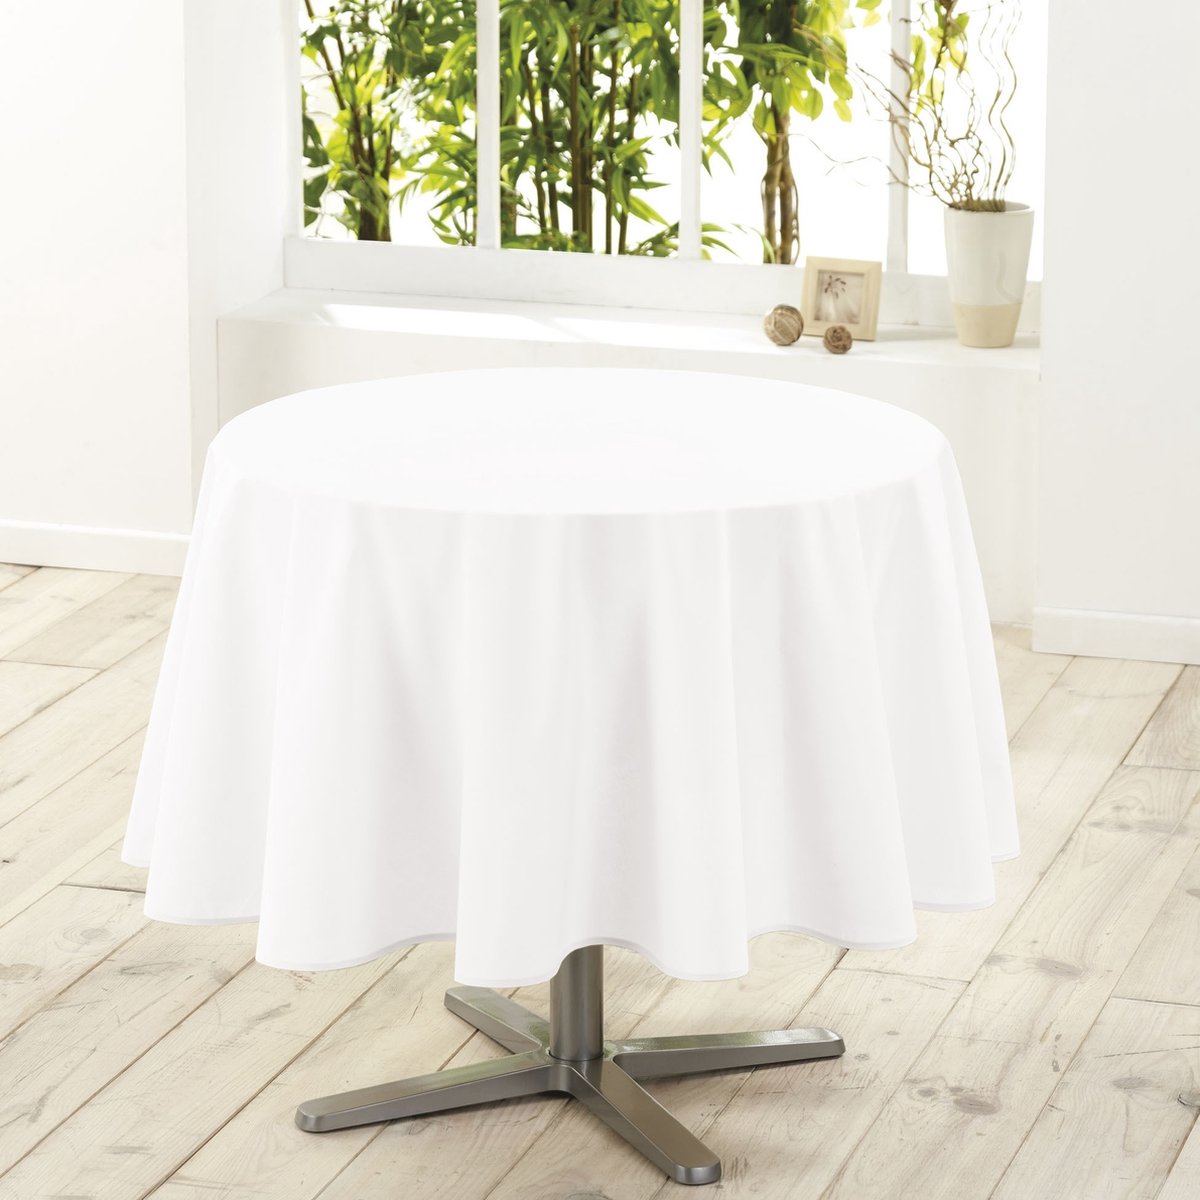 Wicotex-Tafellaken-Tafelkleed- textiel polyester wit rond 180cm-vlekbestendig-waterafstotend